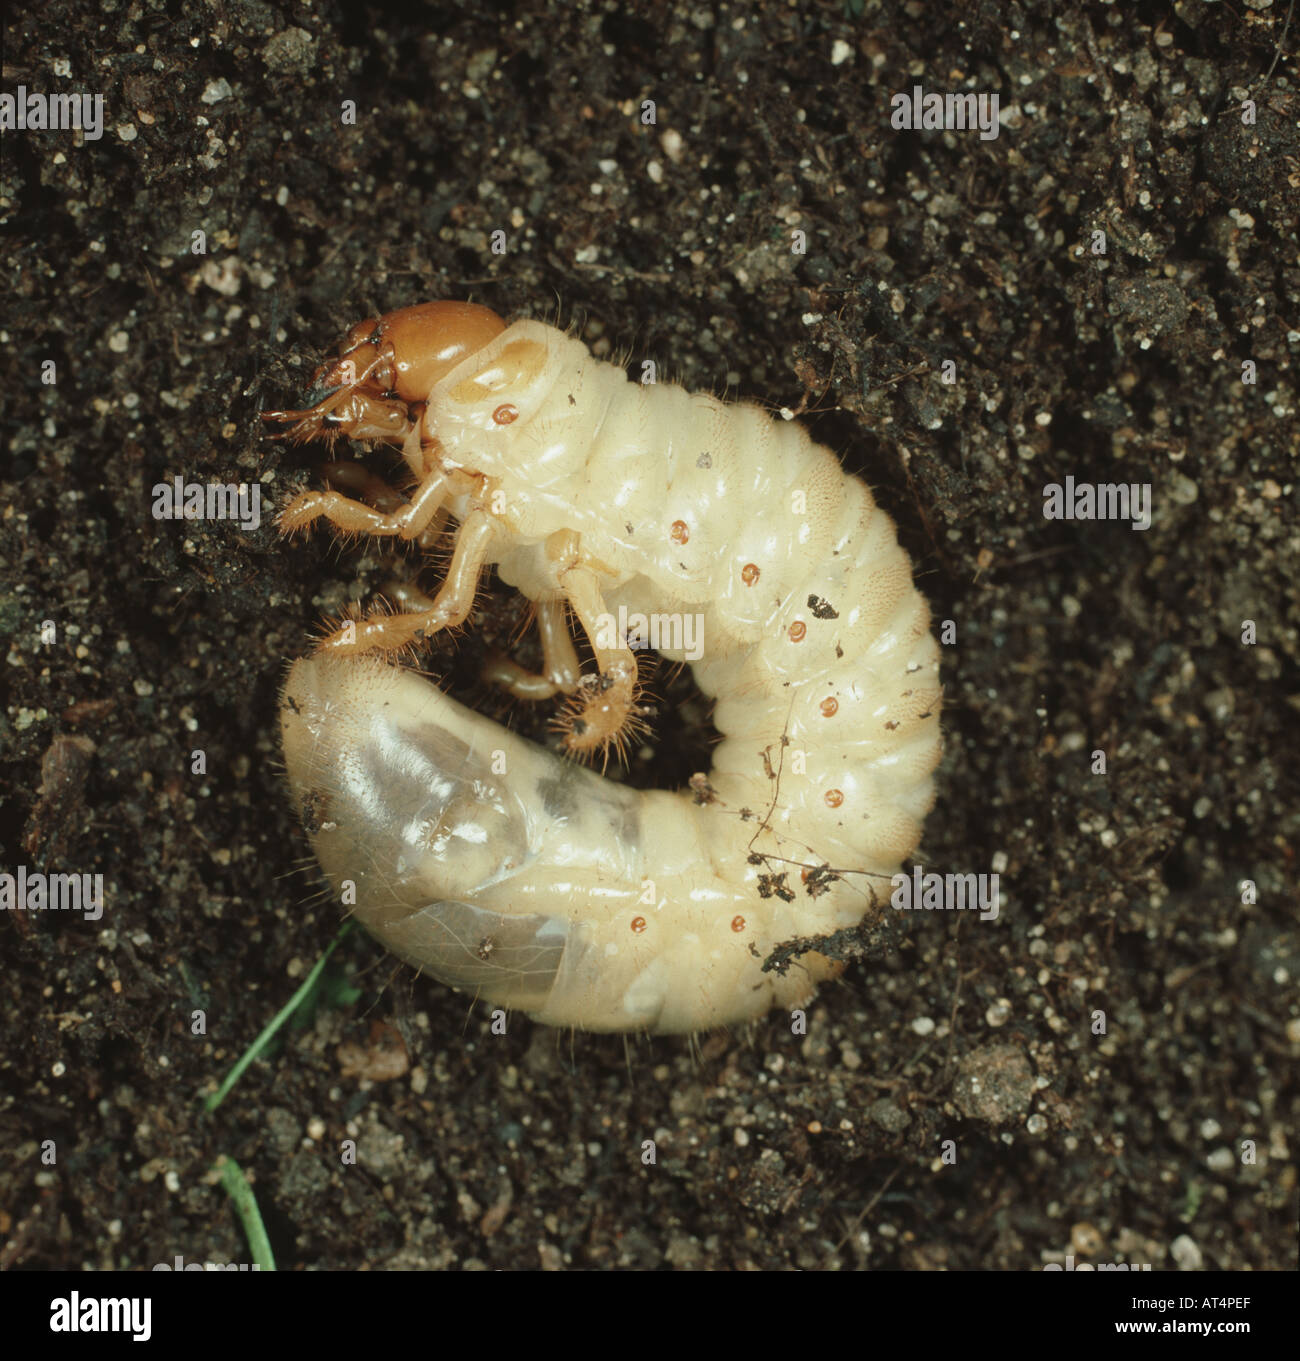 European cockchafer Melolontha melolontha larva grub on soil Stock Photo